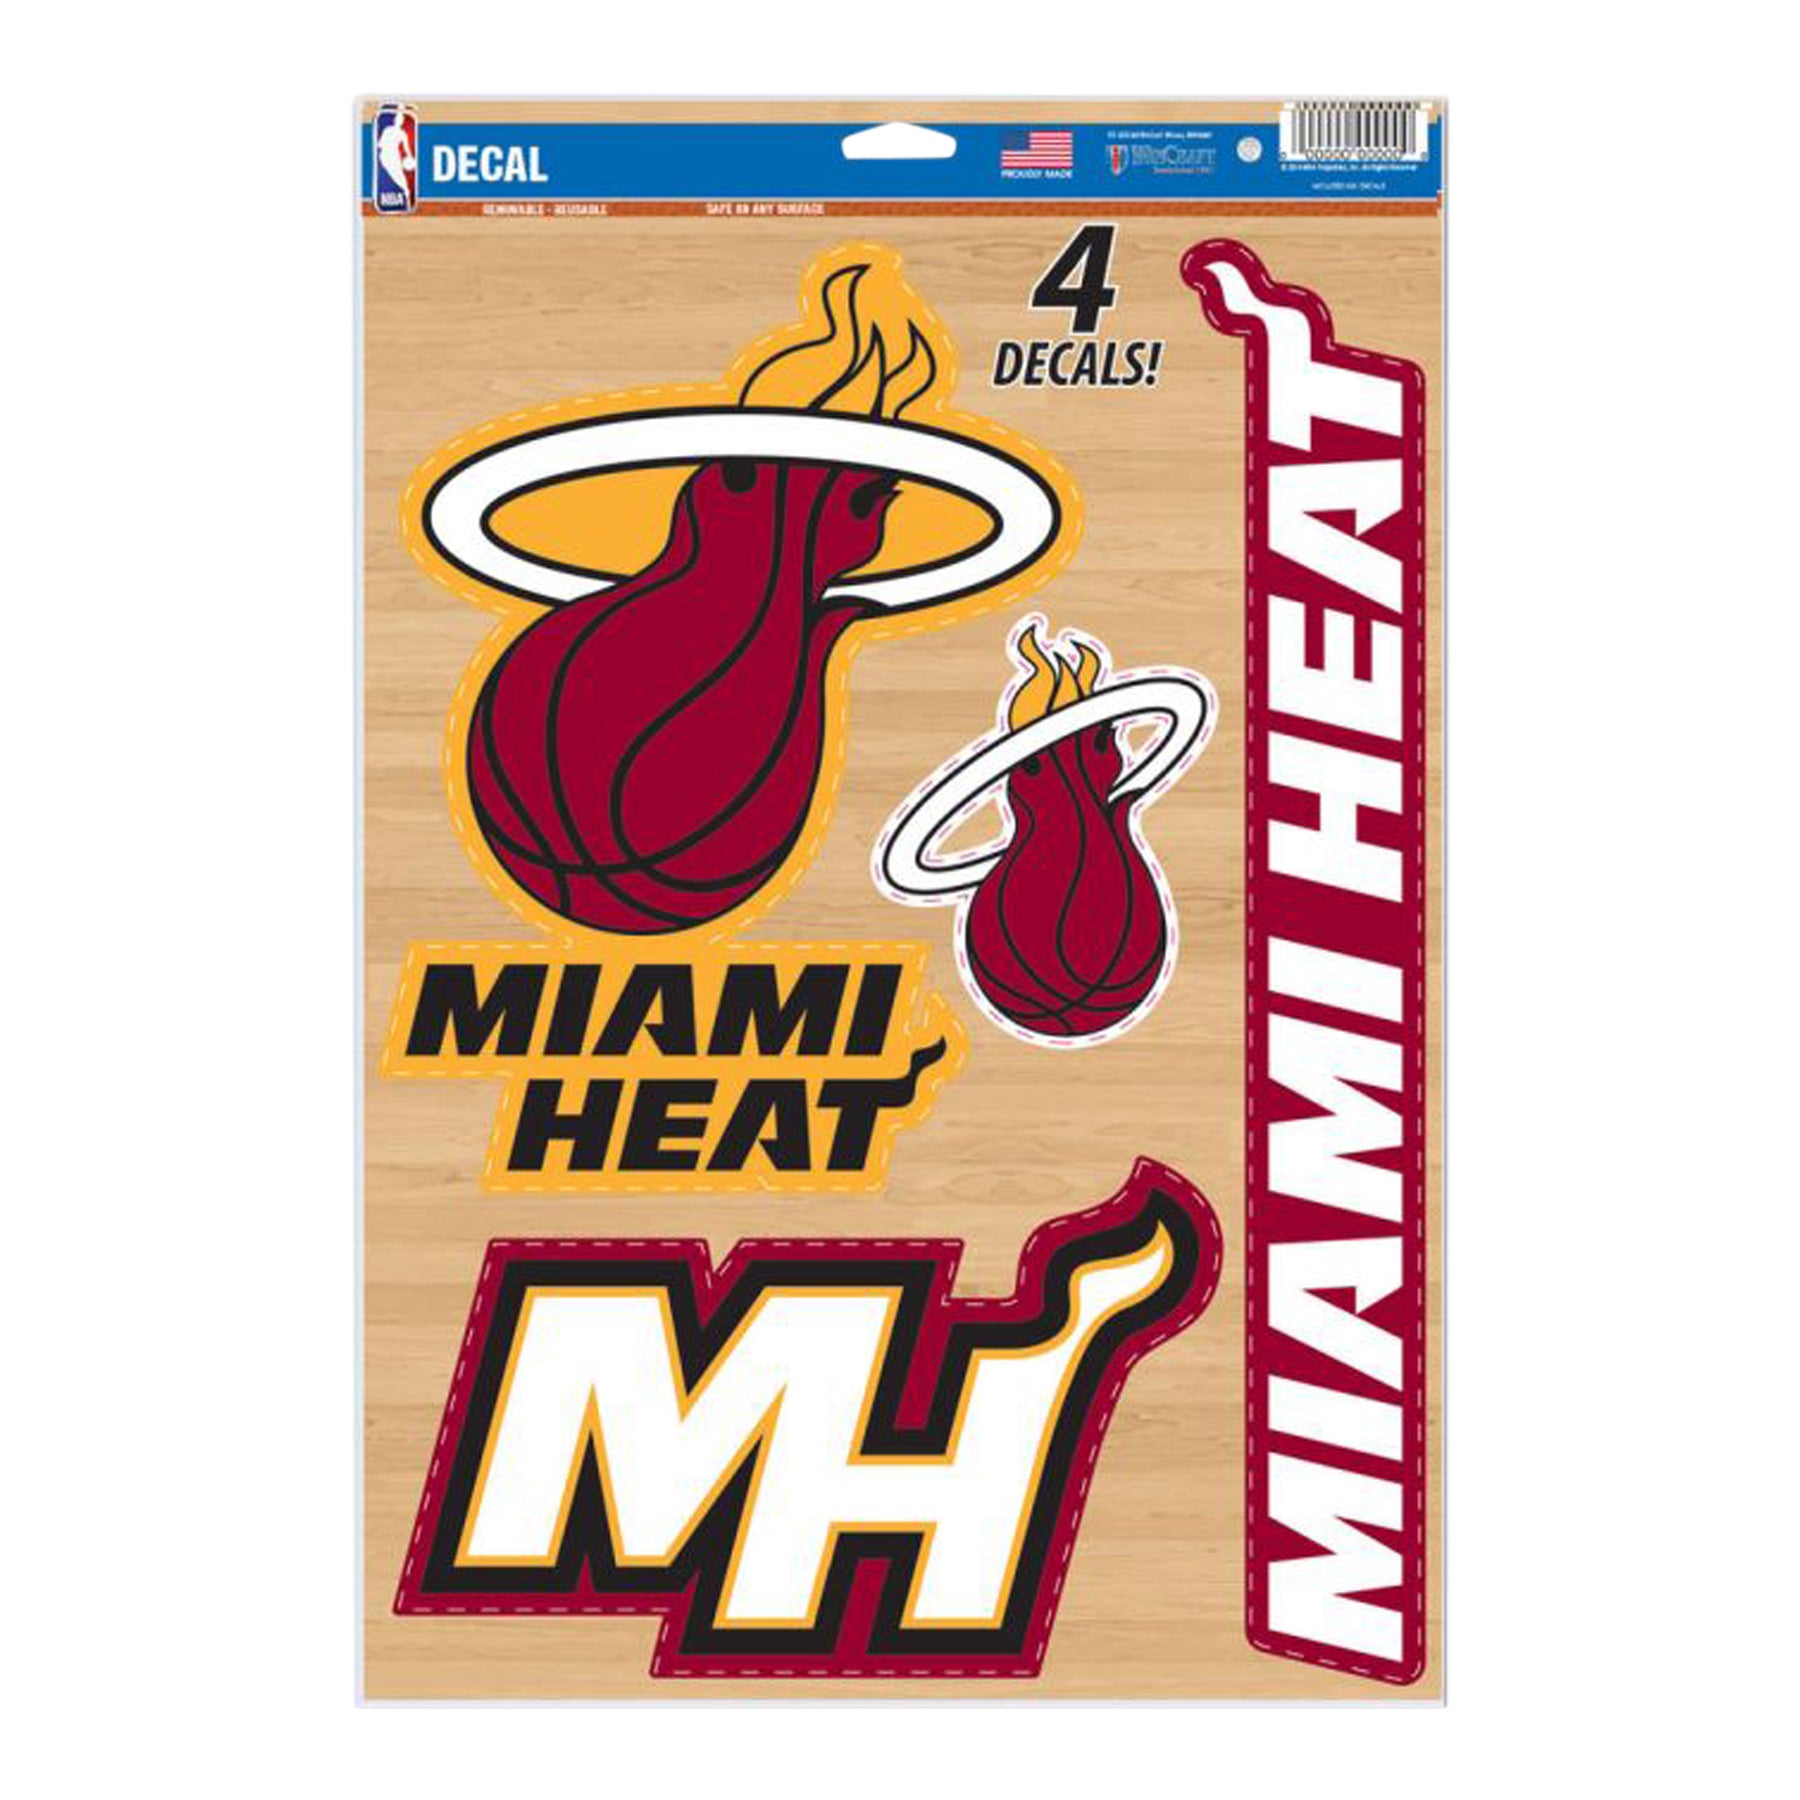 Miami Heat 11x17 Decal